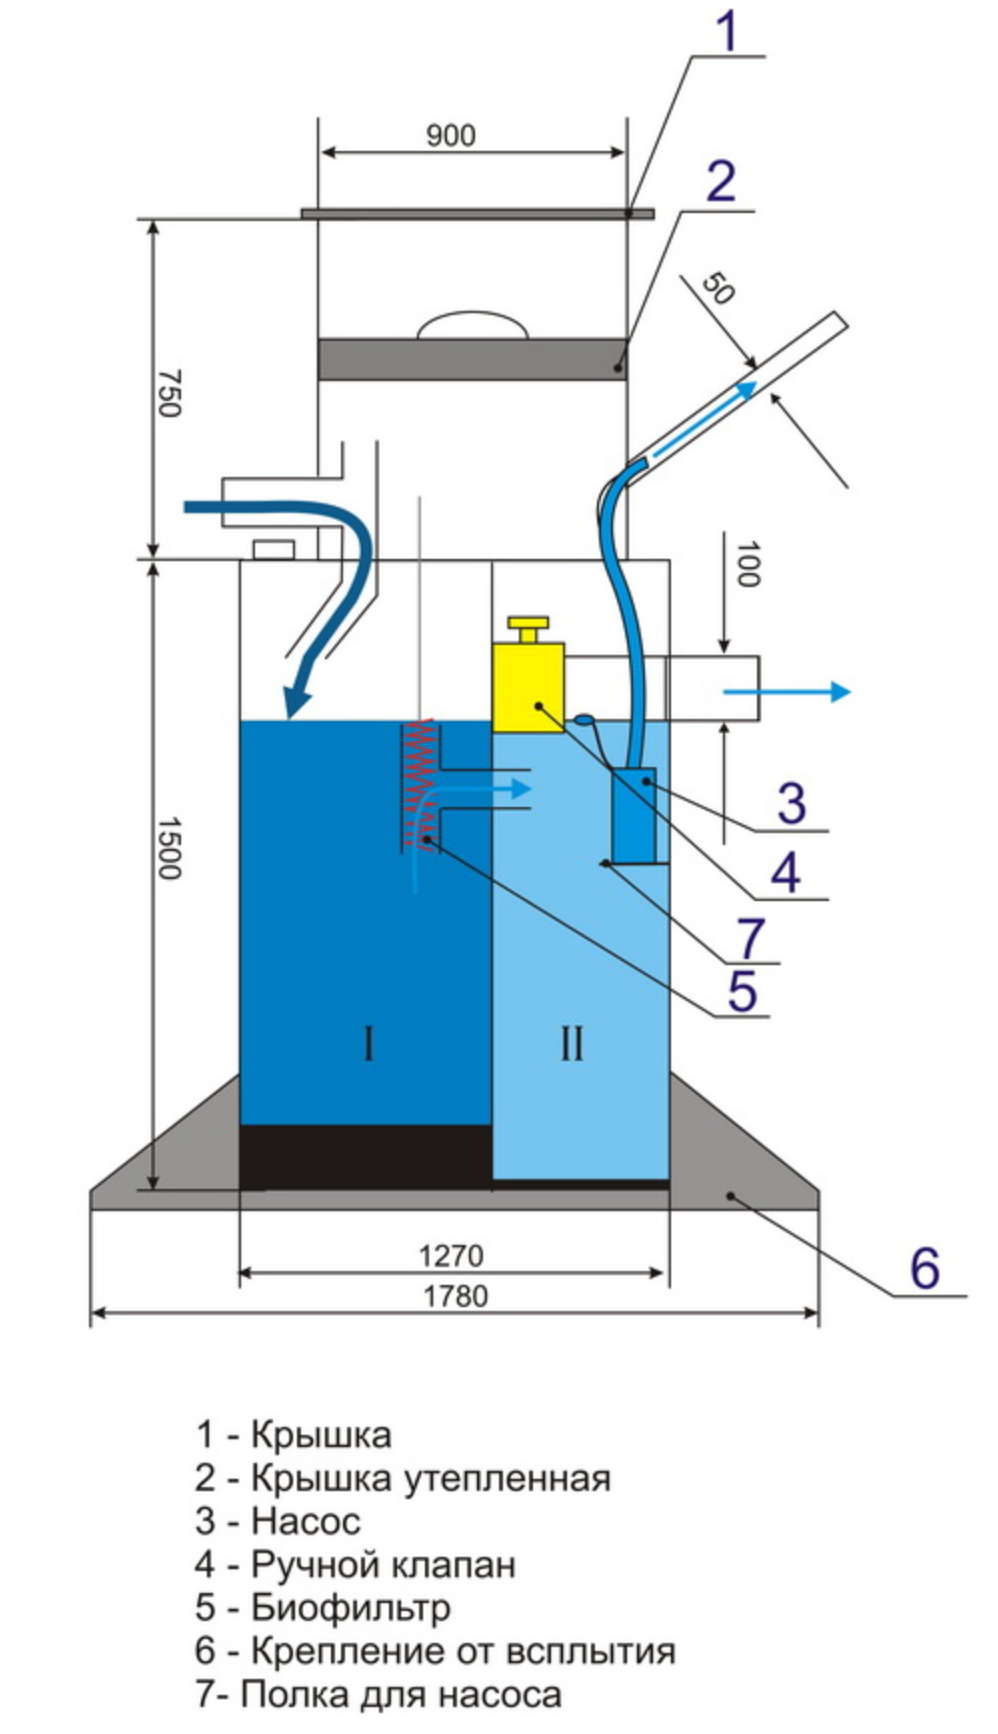 vertical septic tank